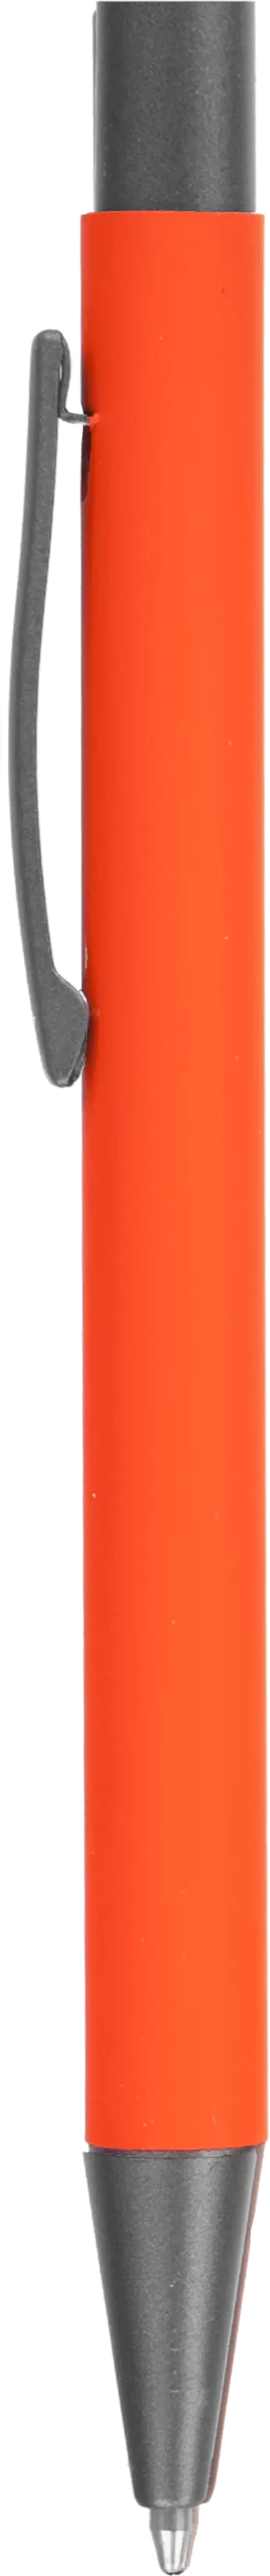 Ручка MAX SOFT TITAN Оранжевая 1110-05